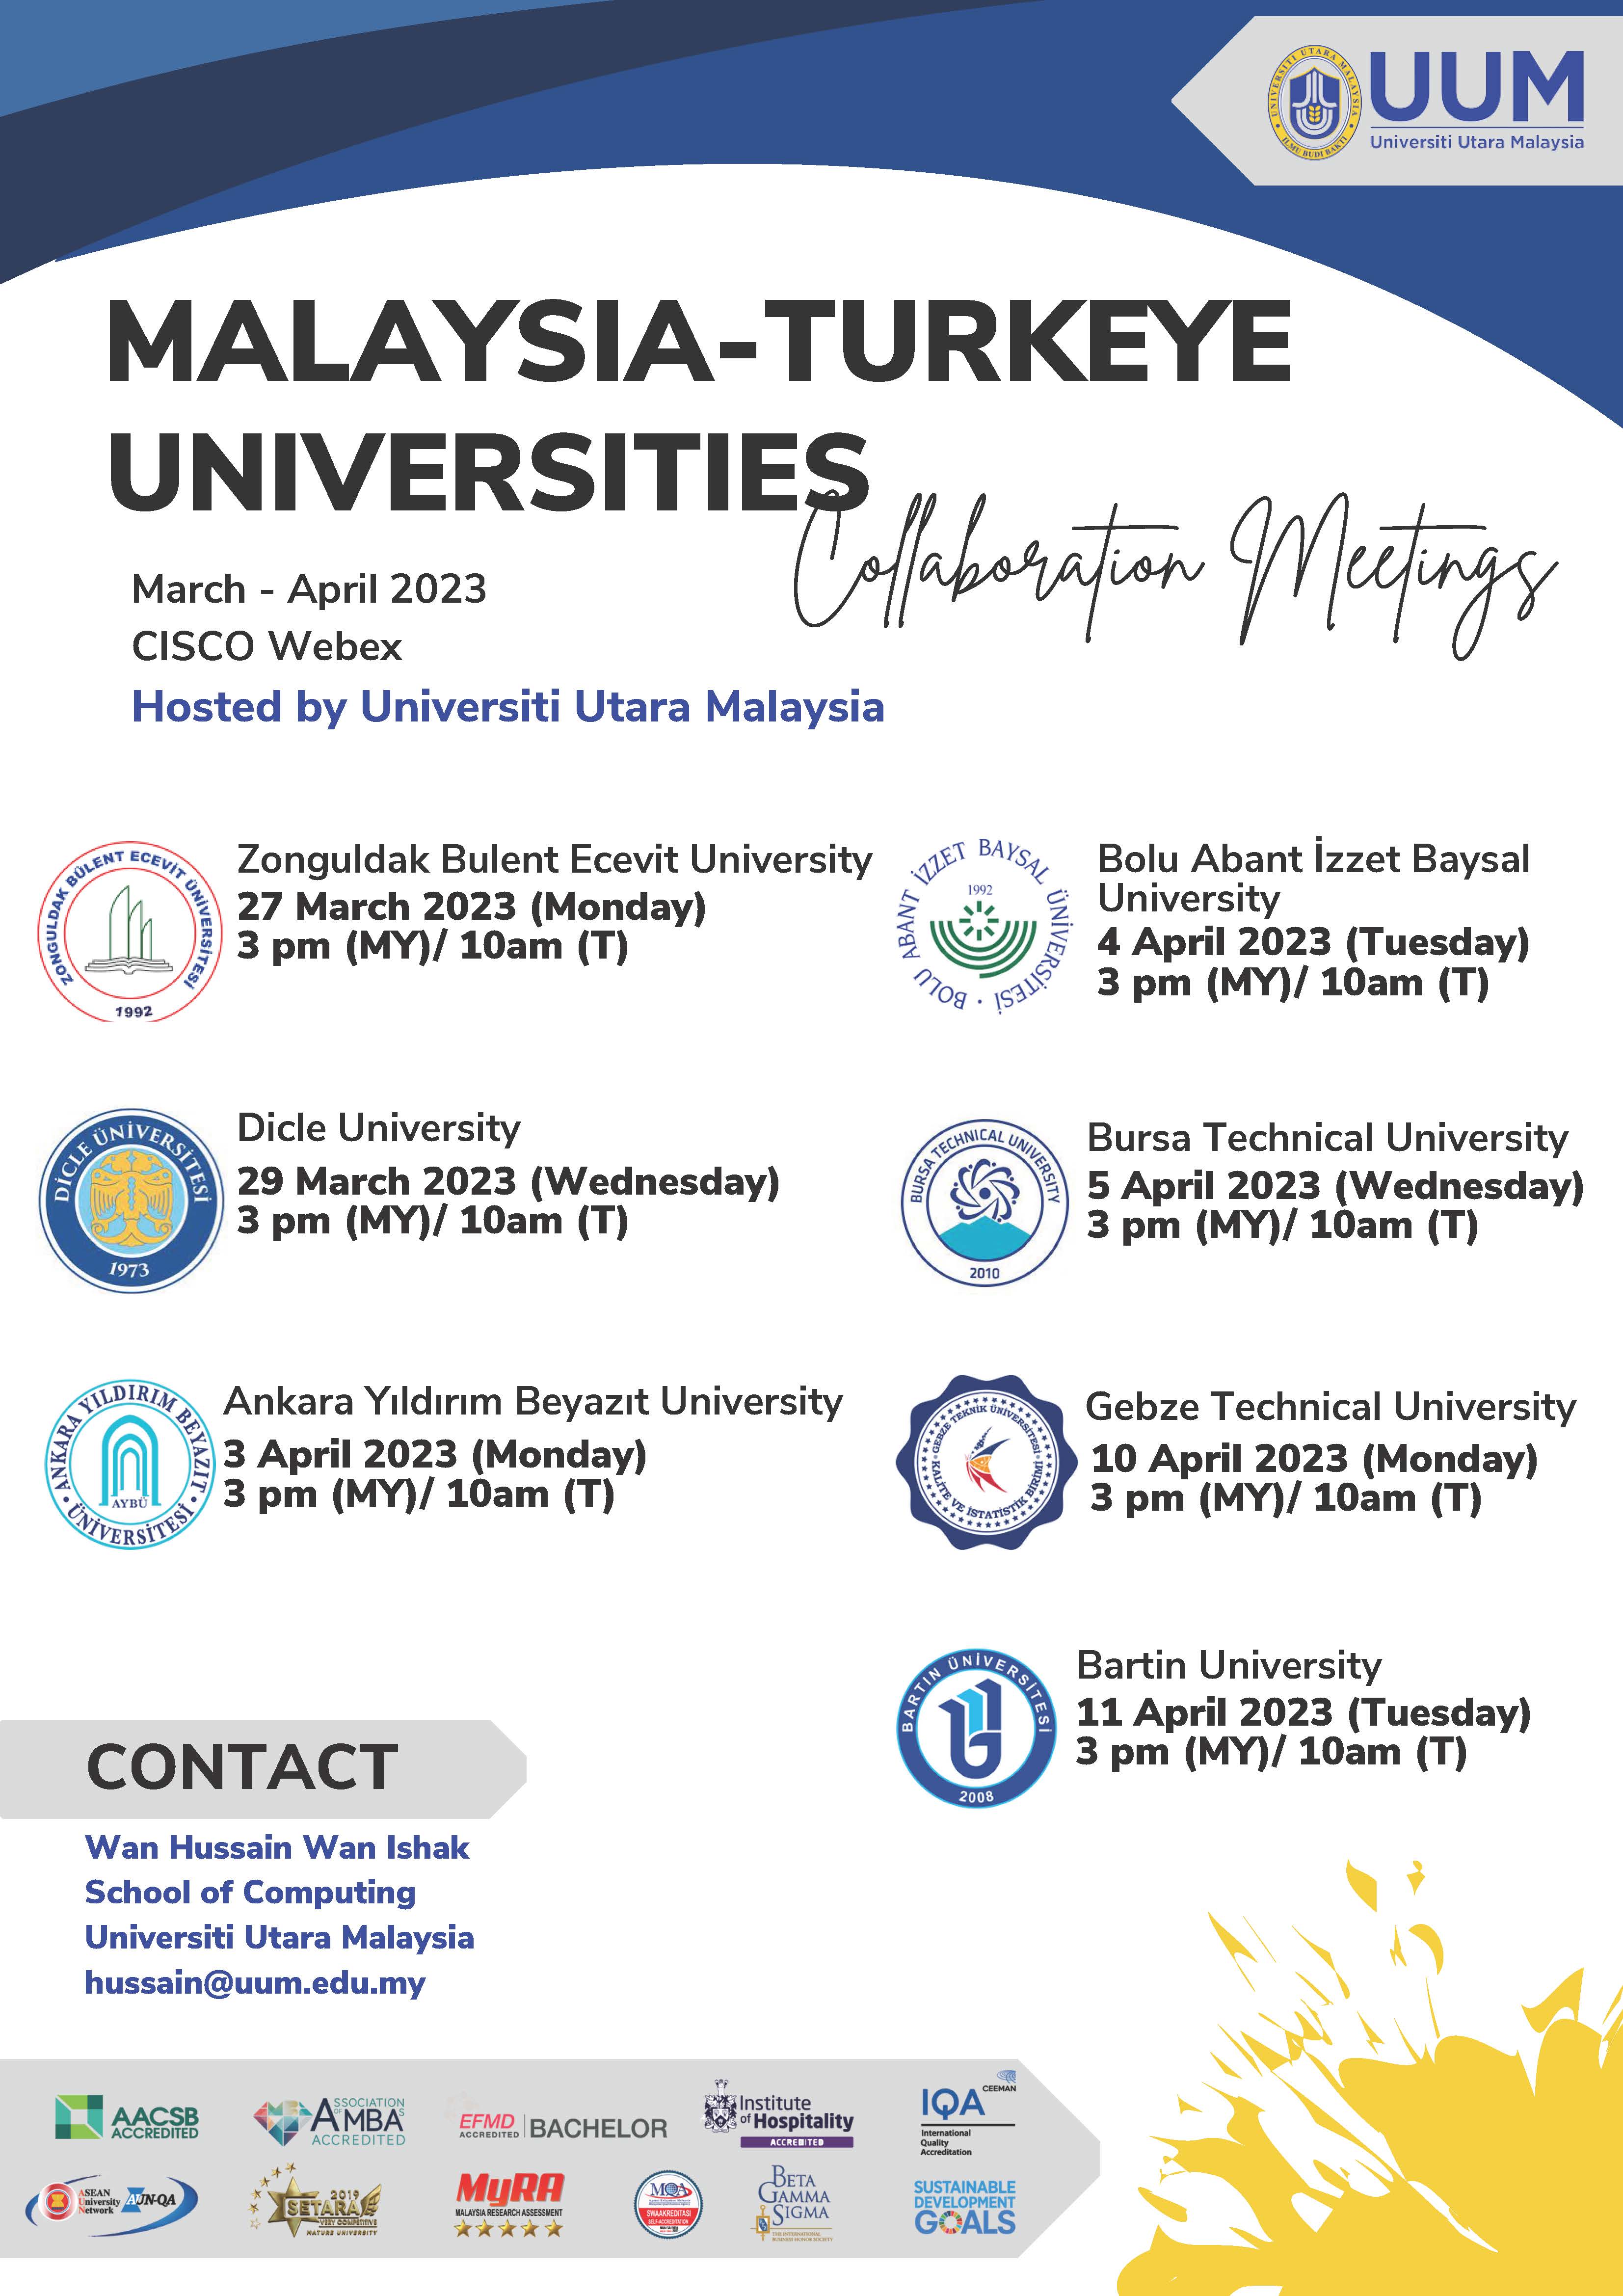 UUM Turkeys Universities Meeting